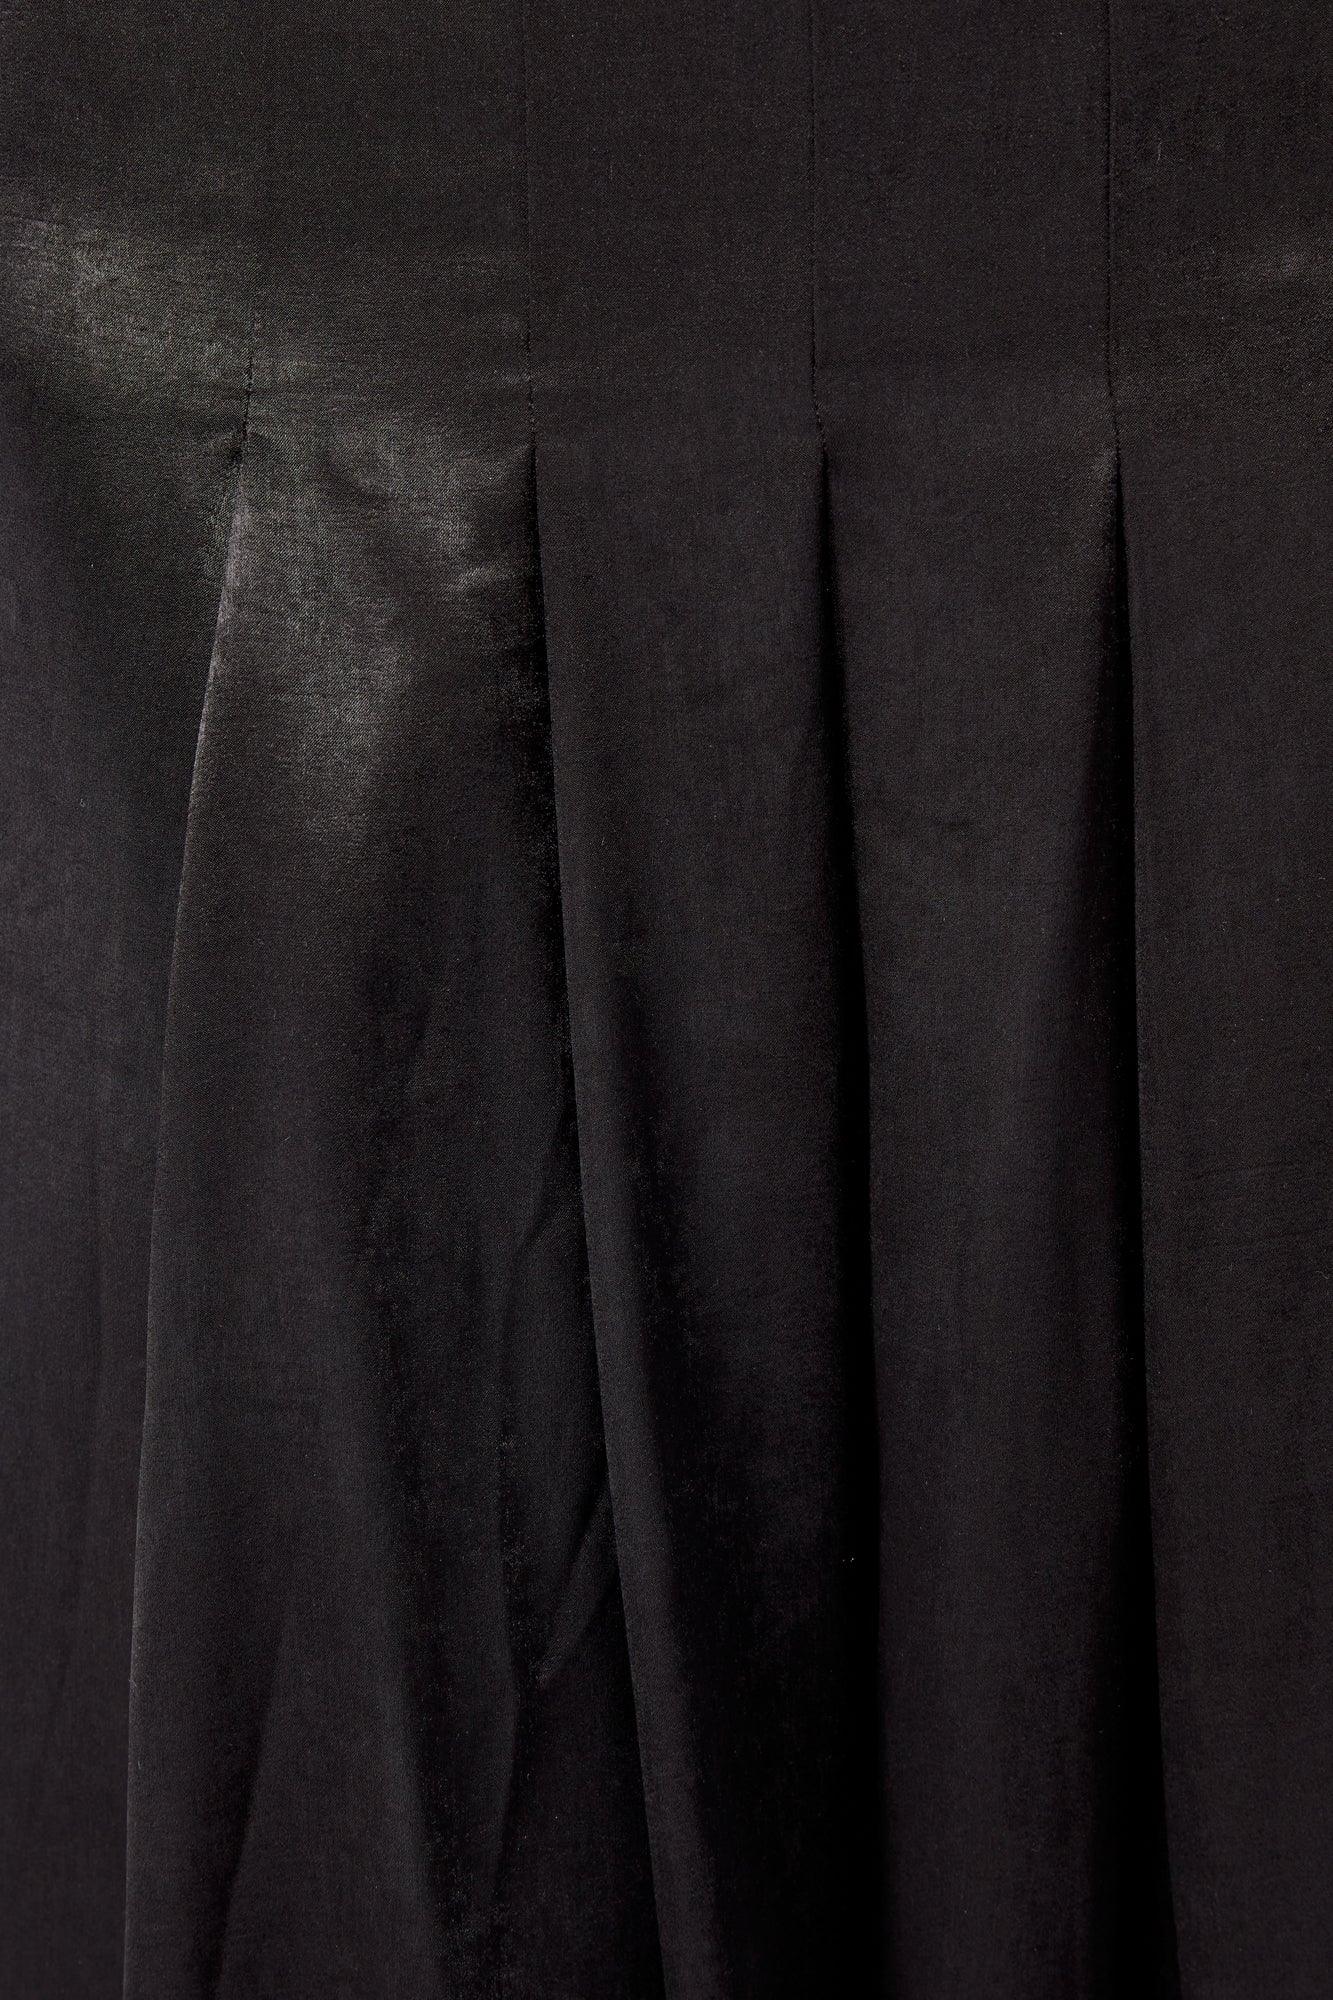 Delphine Black Pleated Skirt - TAHLIRA